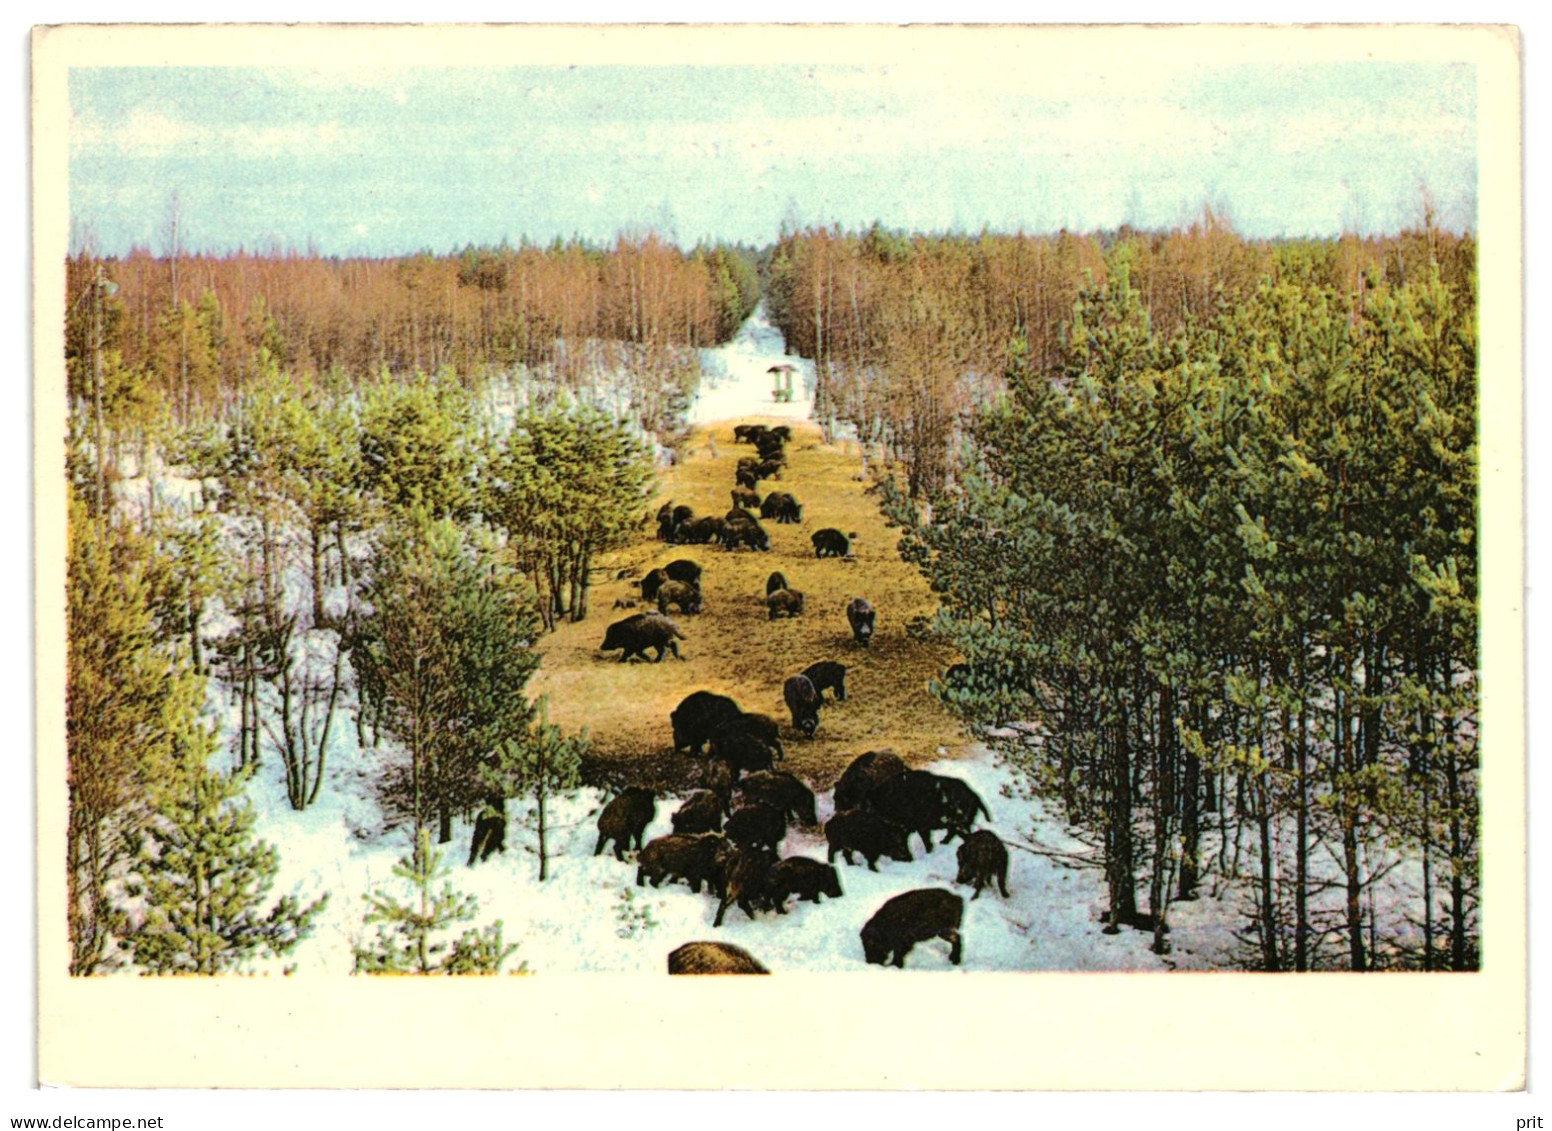 The Herd Of Wild Boars, Pigs, Winter Snow. Unused Postcard. Publisher Eesti Raamat, Tallinn Estonia 1983 - Maiali